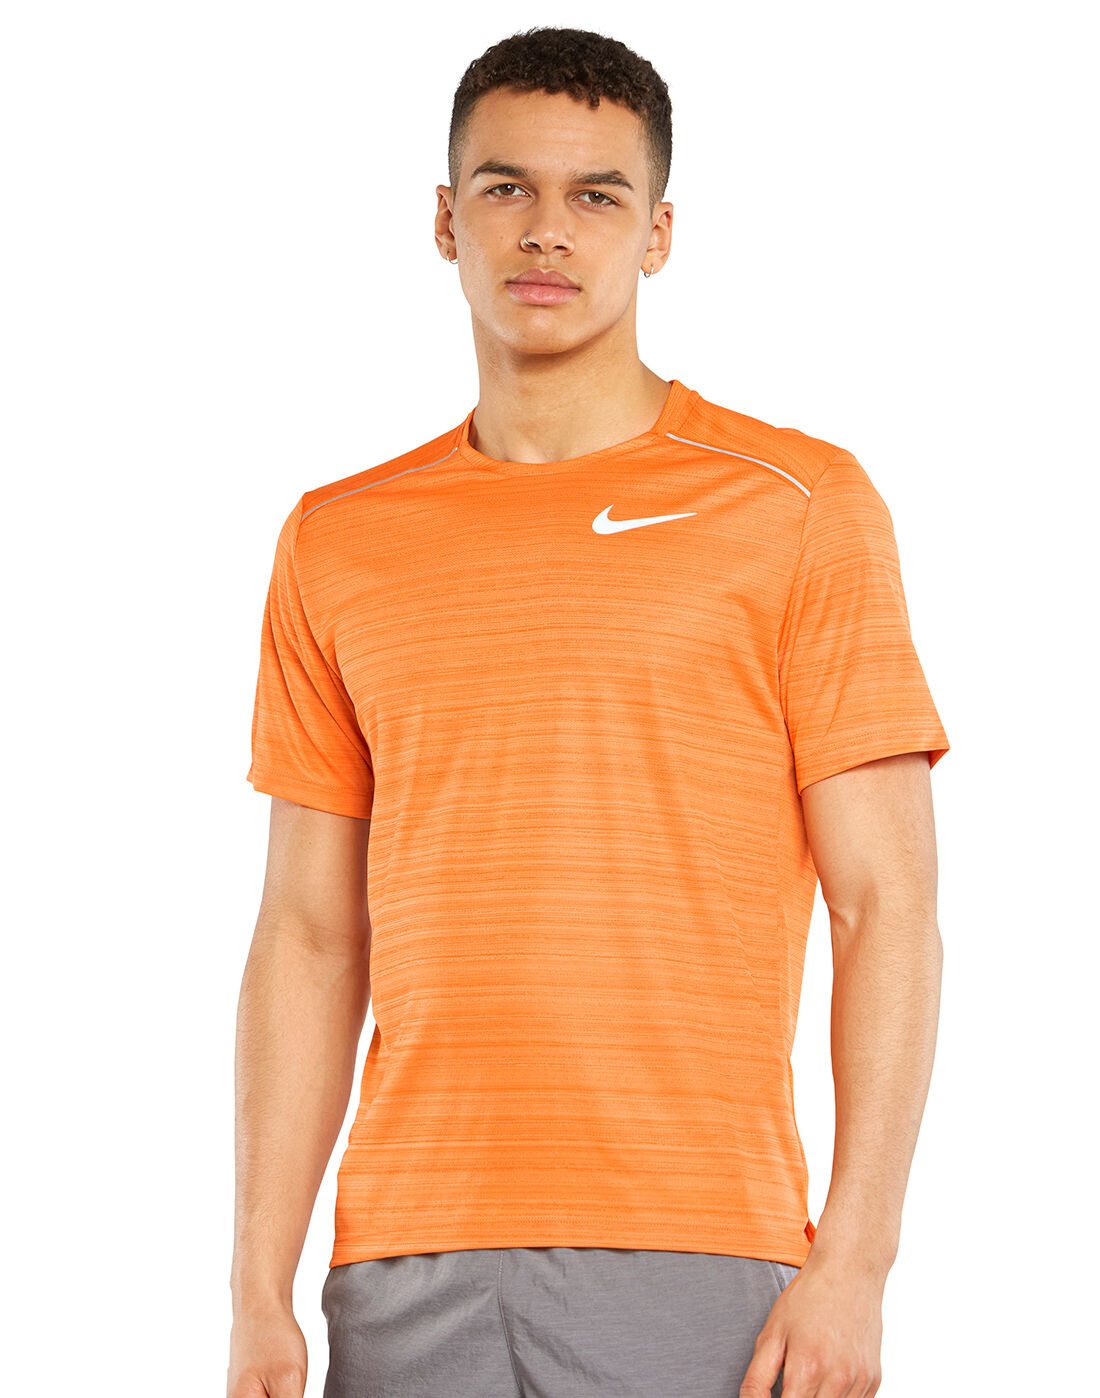 Nike Mens Dry Miler T-shirt - Orange 